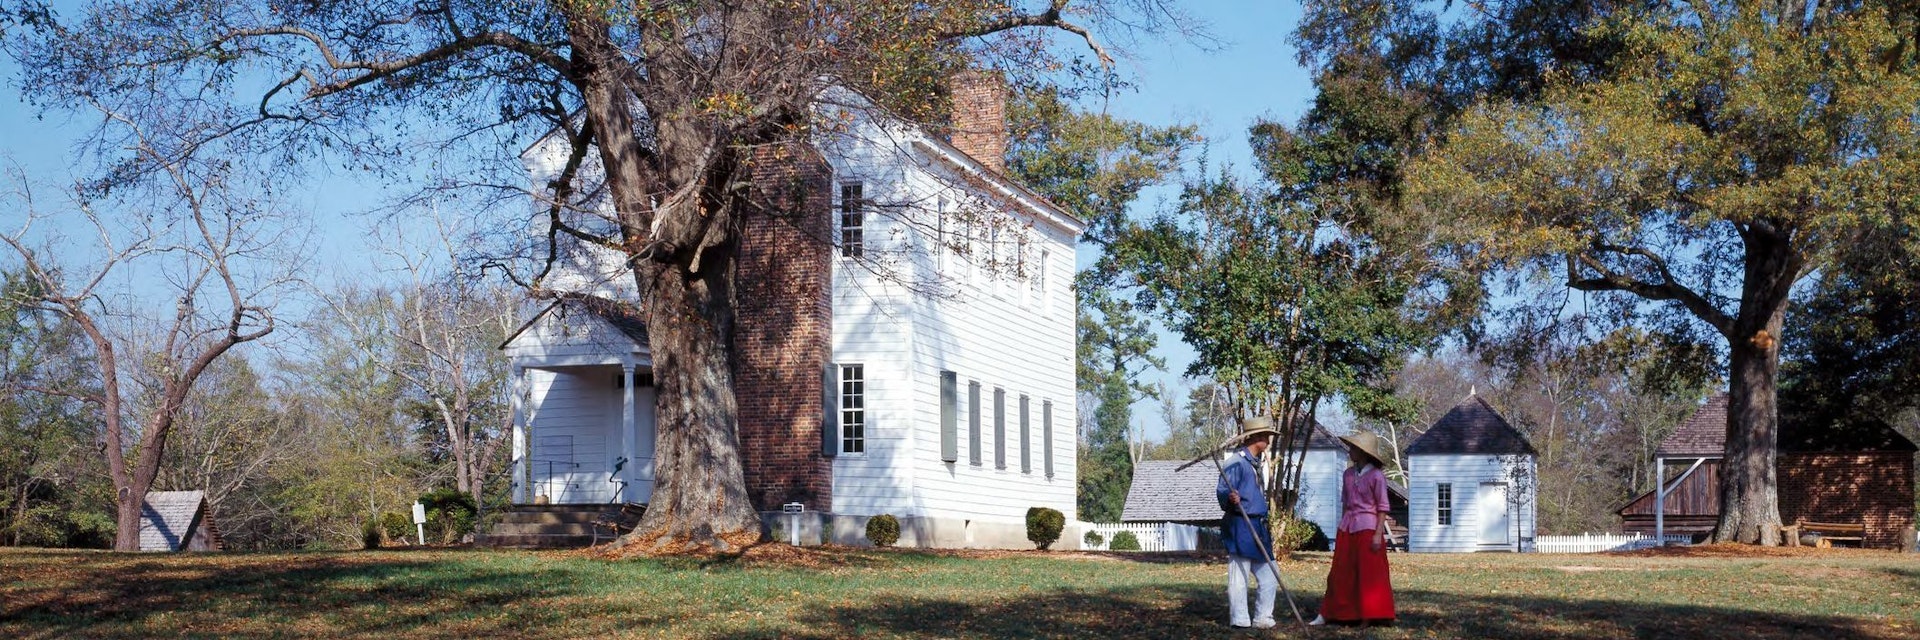 Latta Plantation, Huntersville, North Carolina
Photographs in the Carol M. Highsmith Archive, Library of Congress, Prints and Photographs Division

https://www.loc.gov/resource/highsm.12899/?r=-0.871,-0.127,1.927,0.78,0